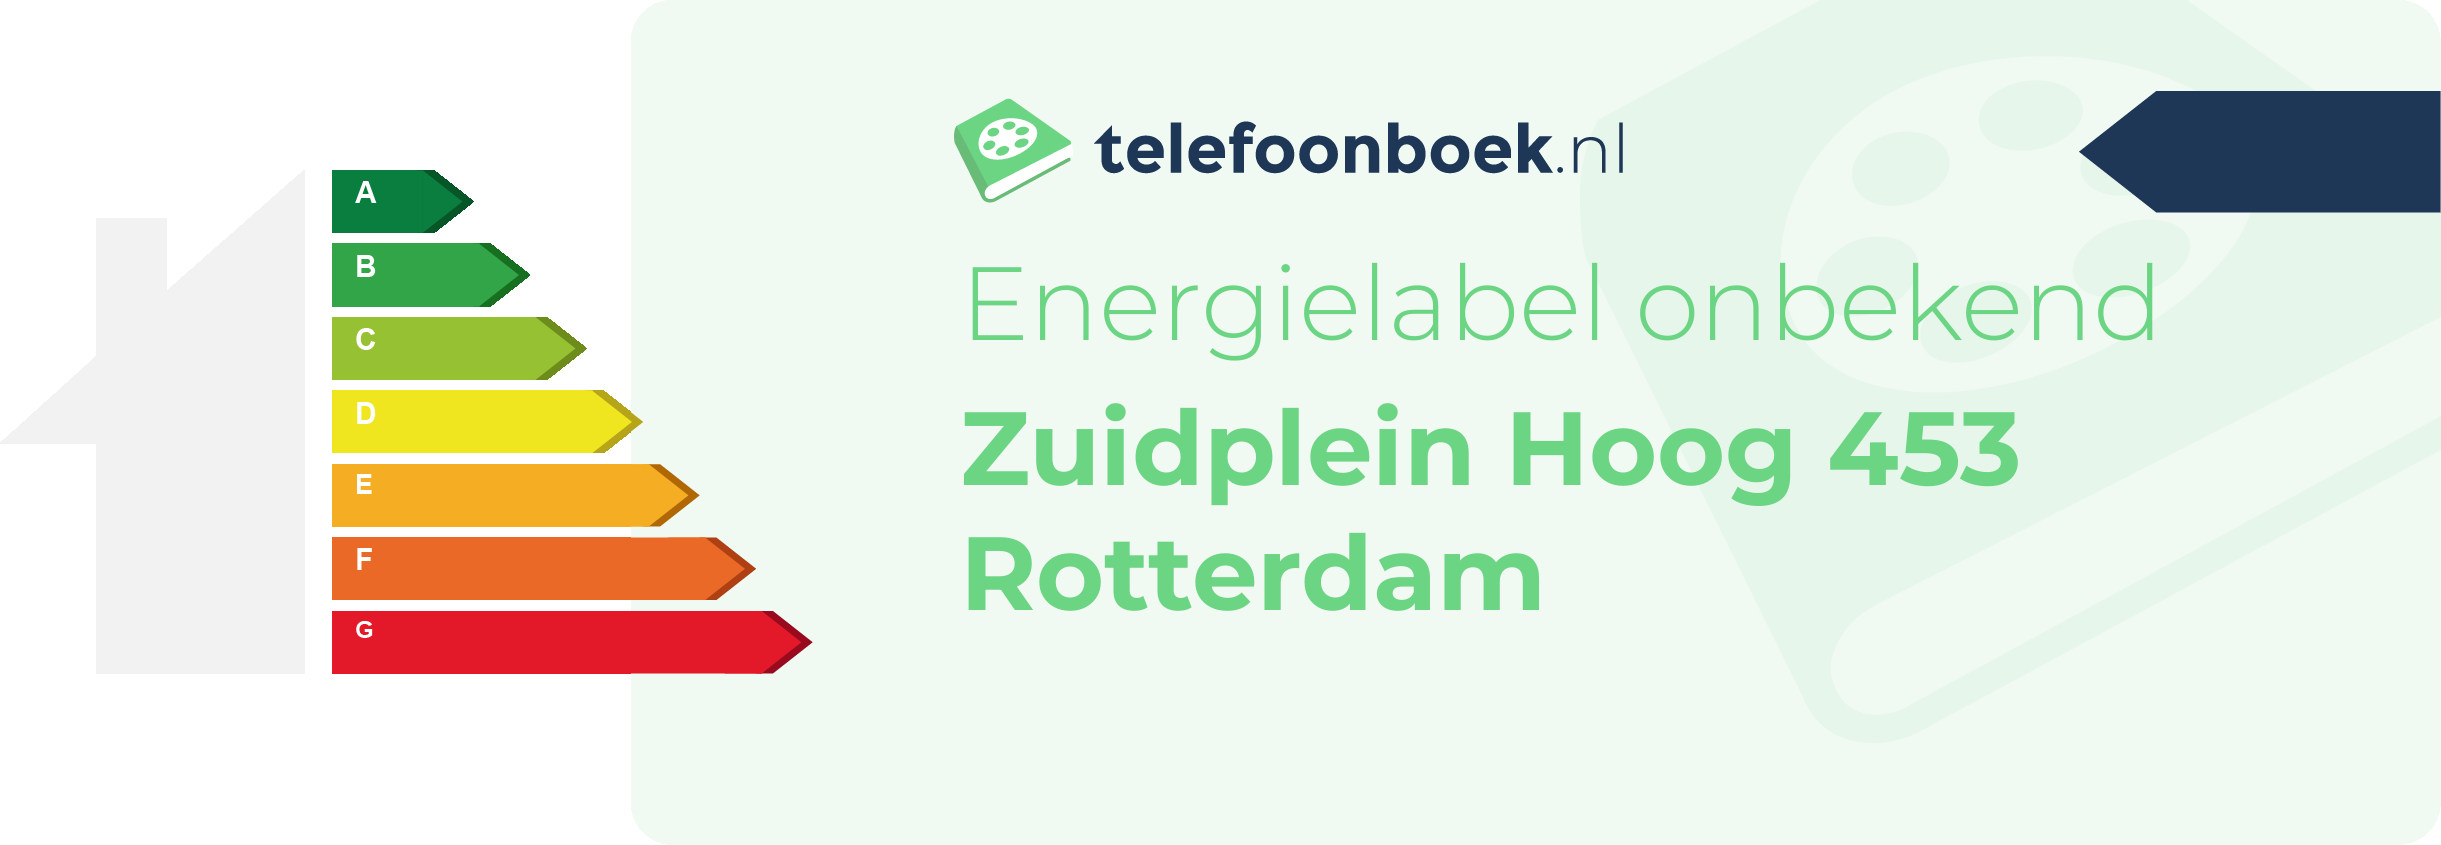 Energielabel Zuidplein Hoog 453 Rotterdam